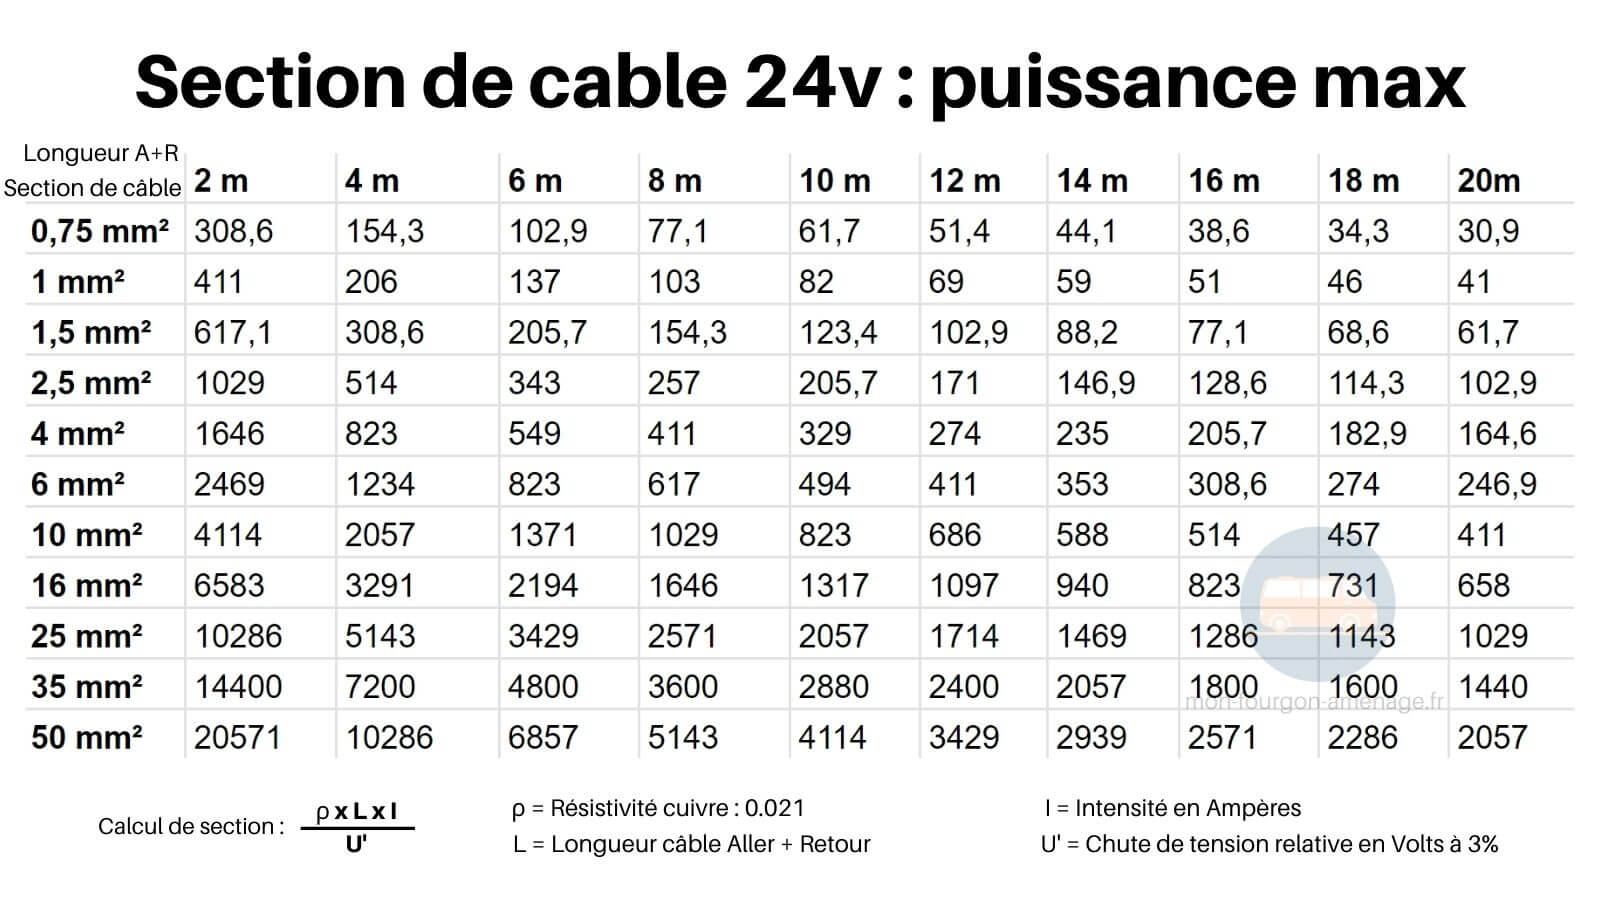 Section de cable, cable 24v, puissance 24v, abaque cable 24v